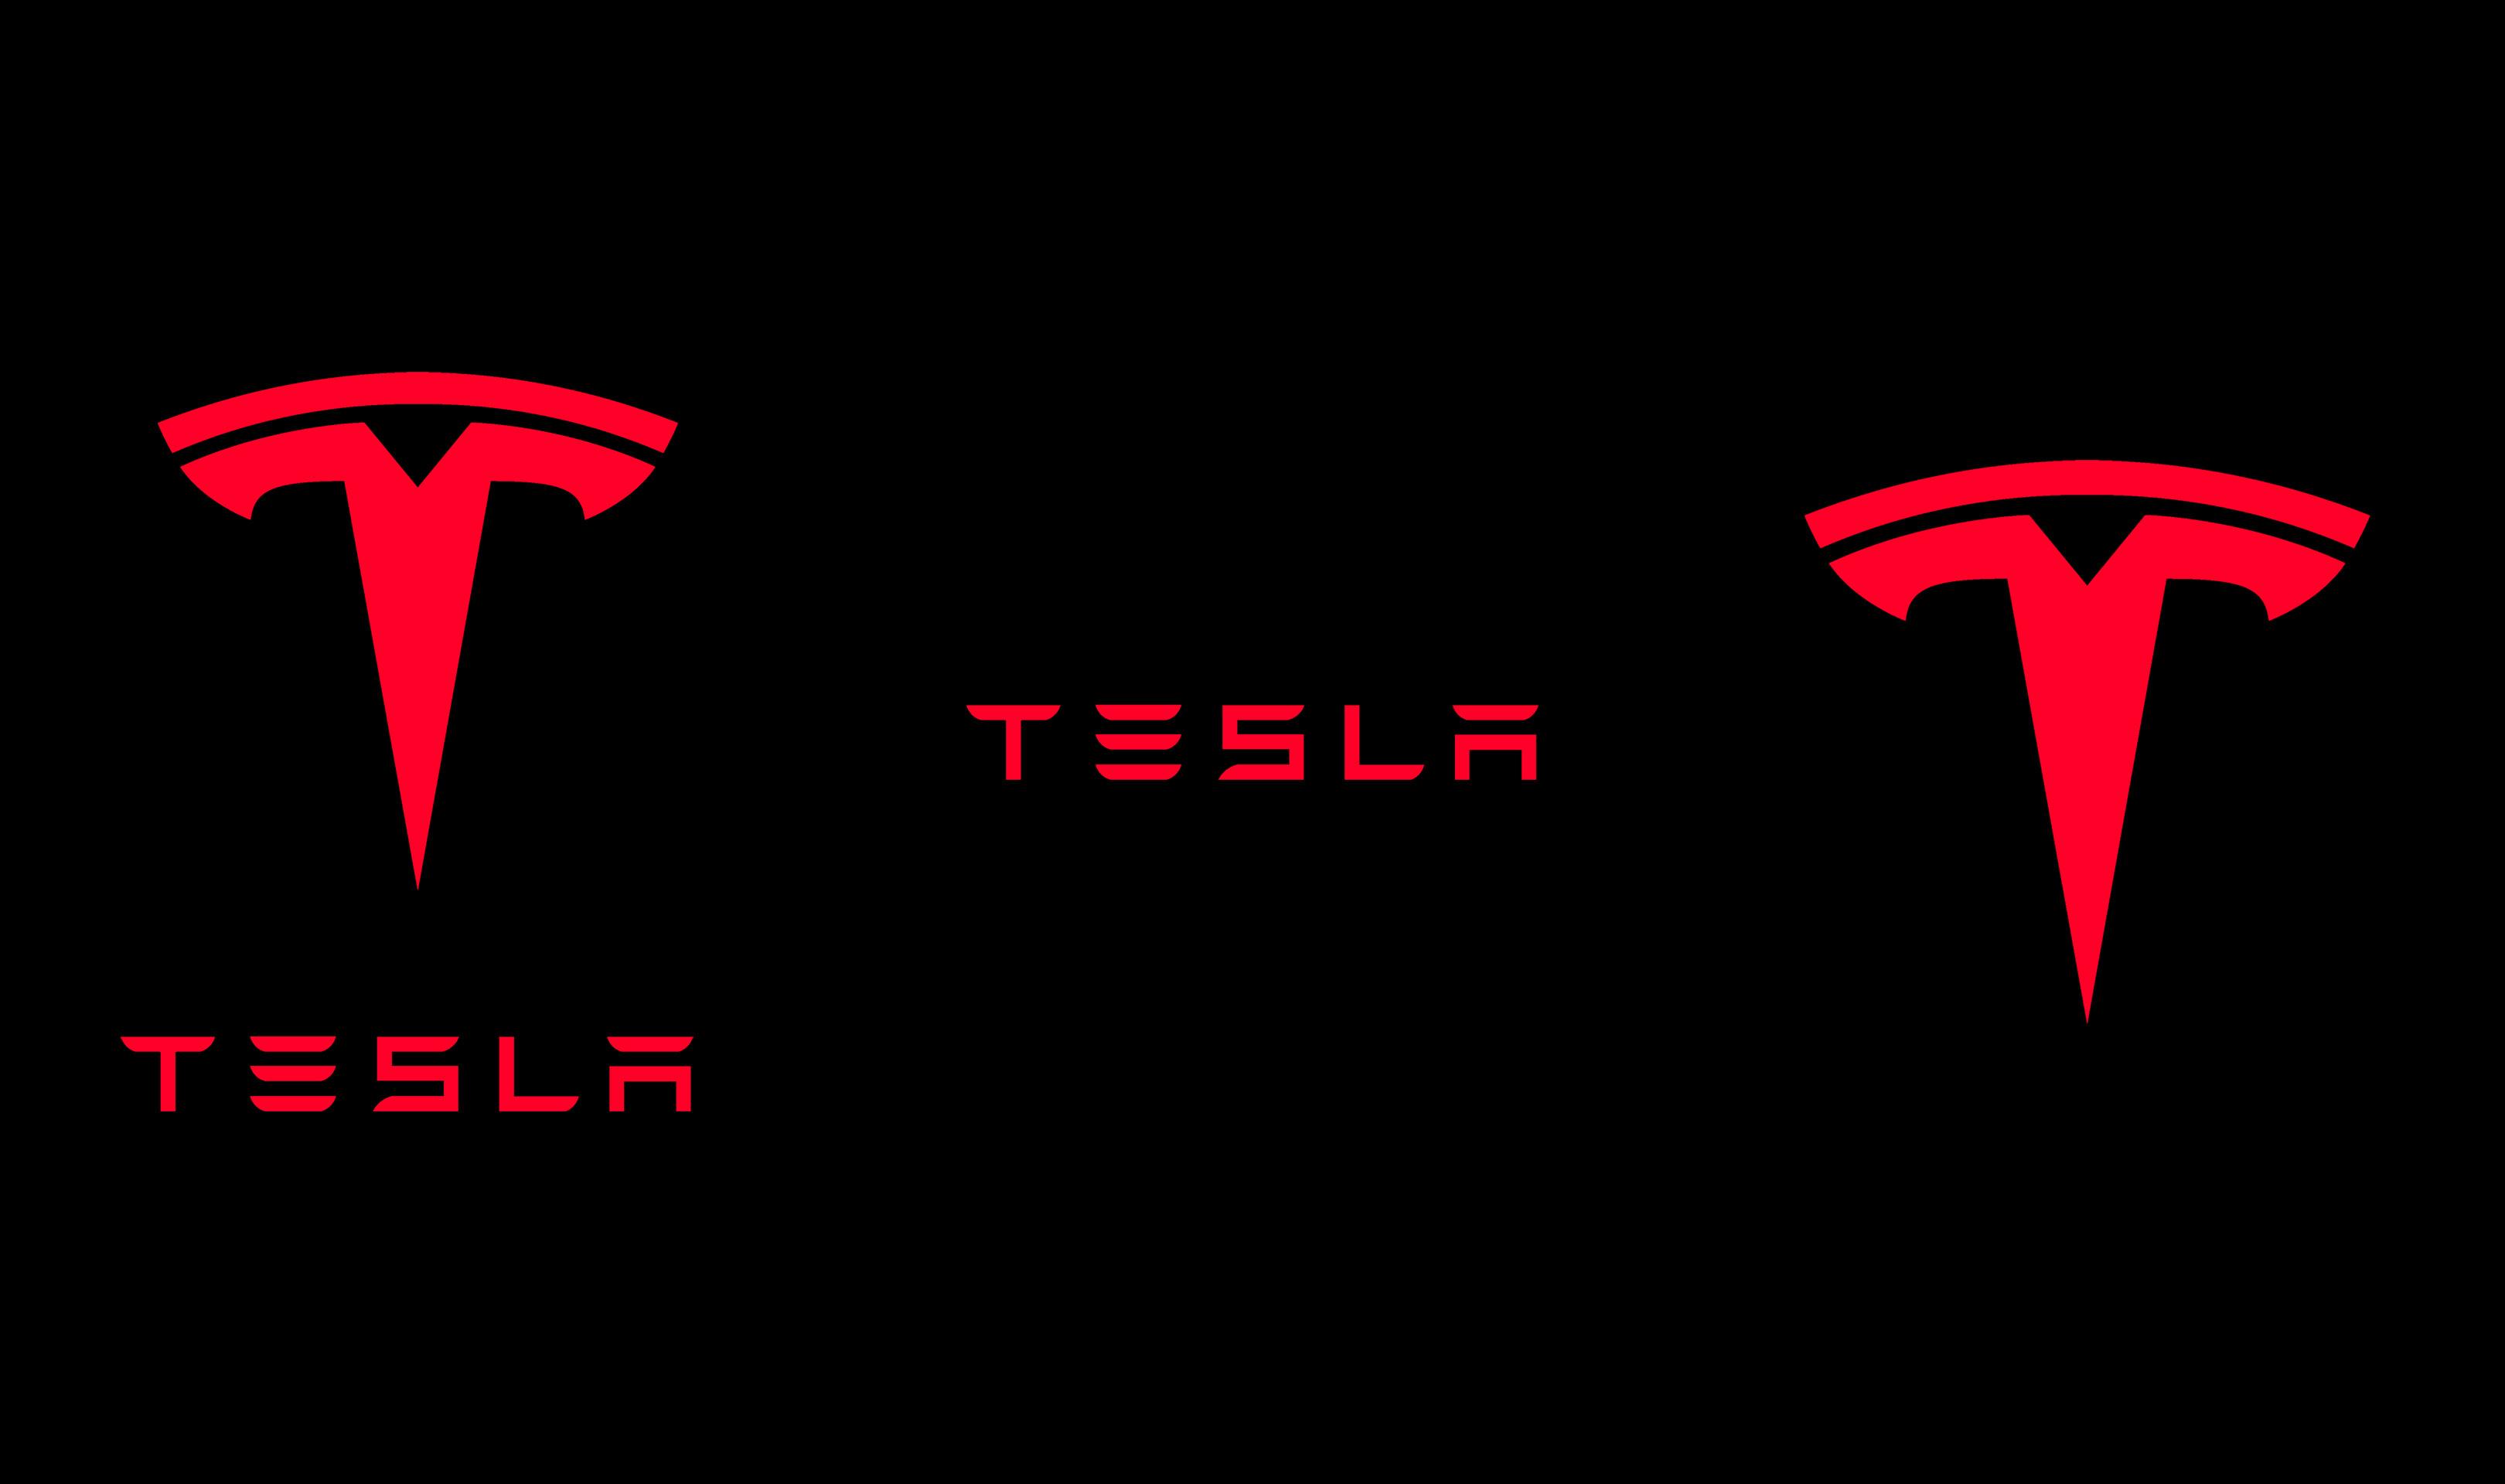 Tesla Red Logo - Tesla Logos [FHD & QHD] Link in comments : Amoledbackgrounds